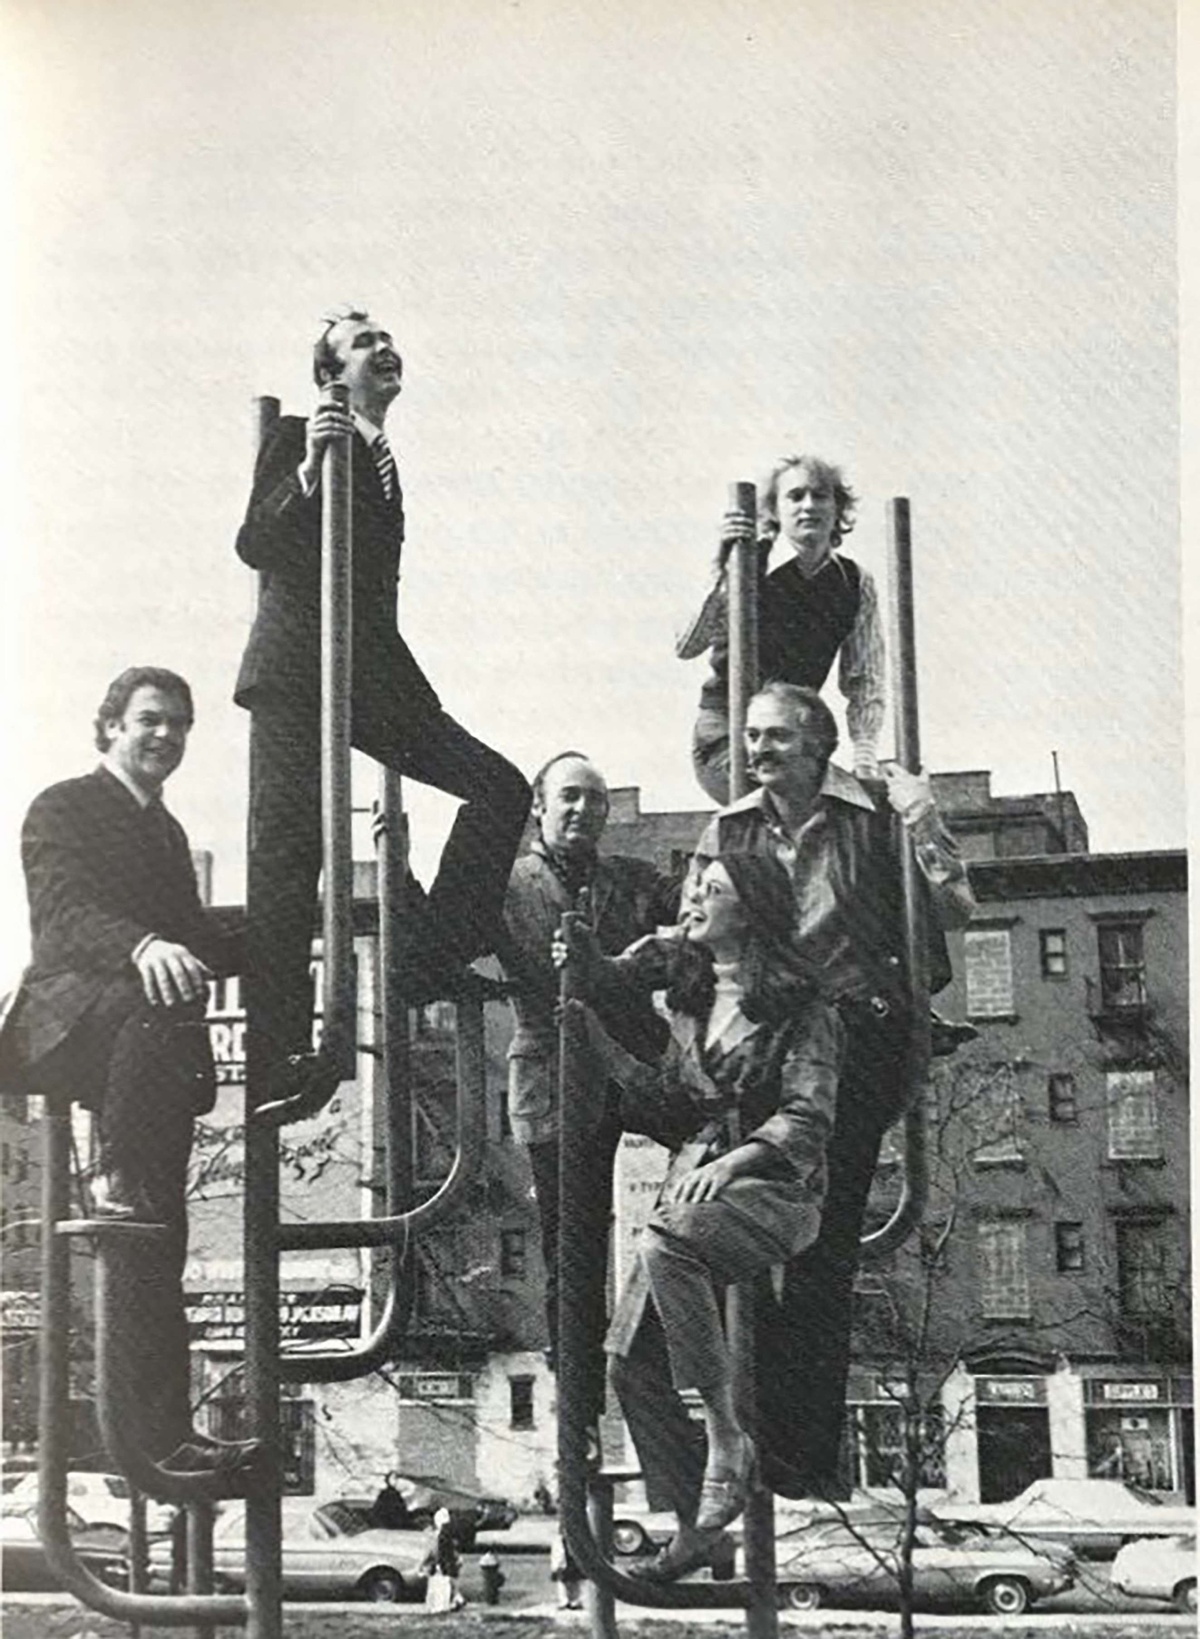 Black and white photo of six individuals on playground equipment in New York City